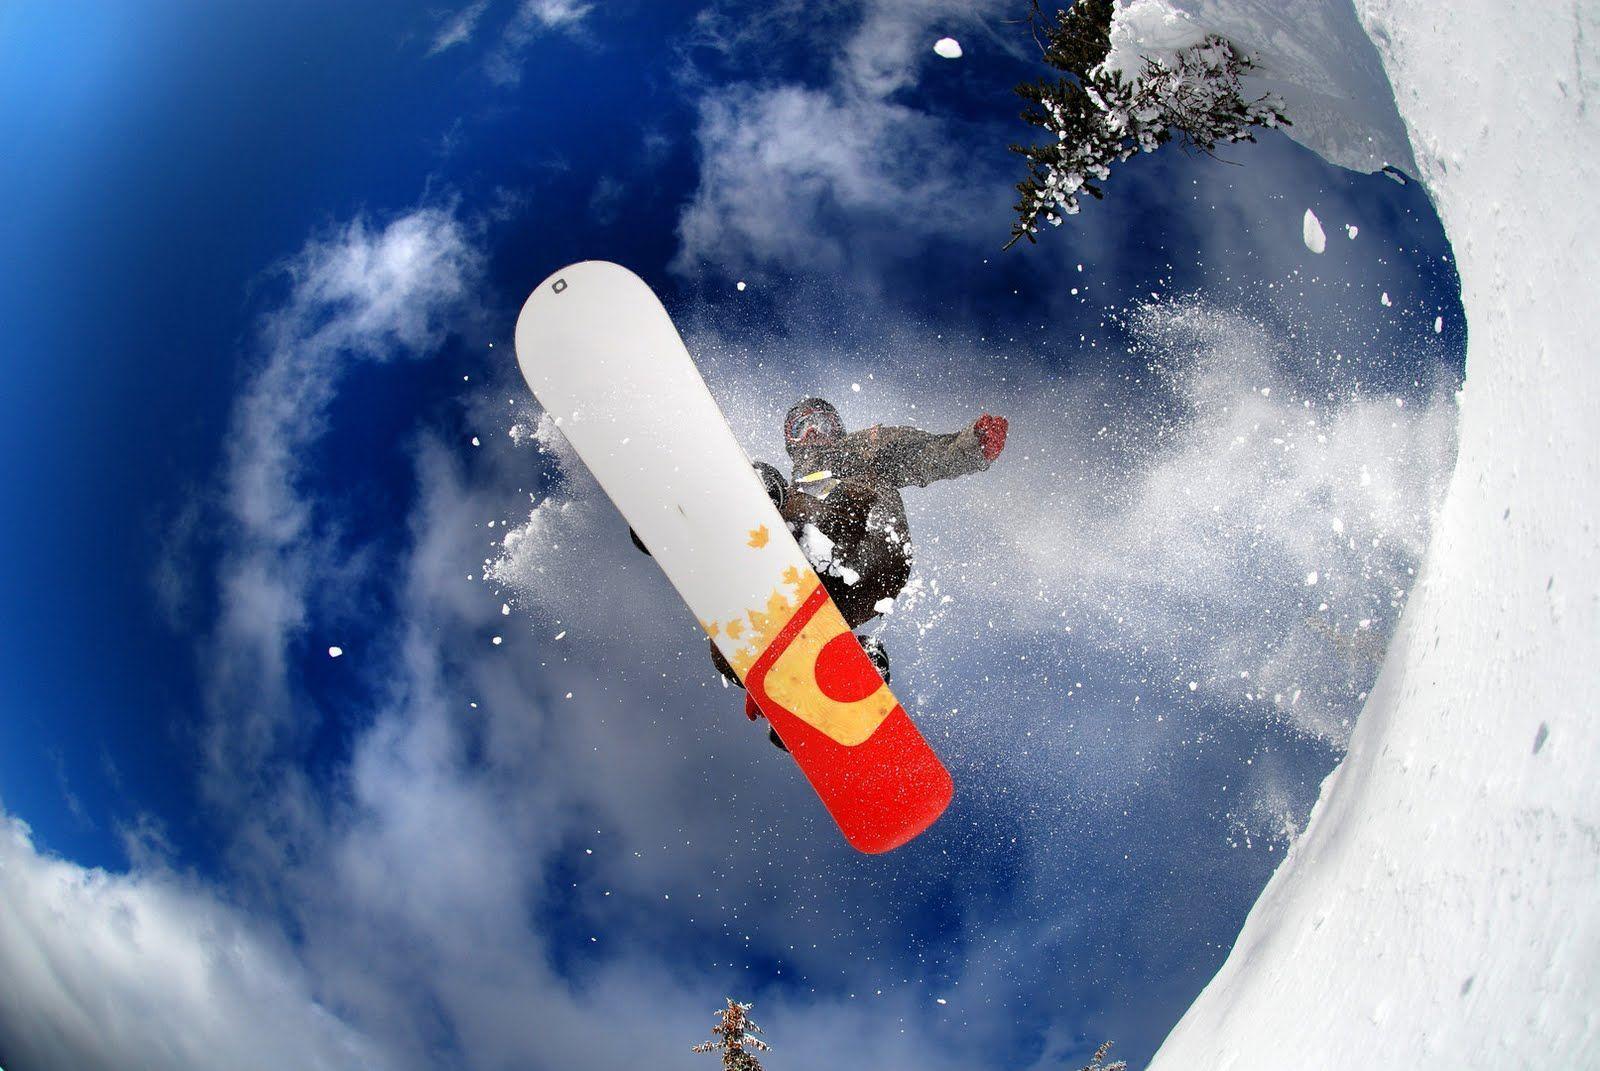 Tiffany Best: snowboarding wallpaper hd